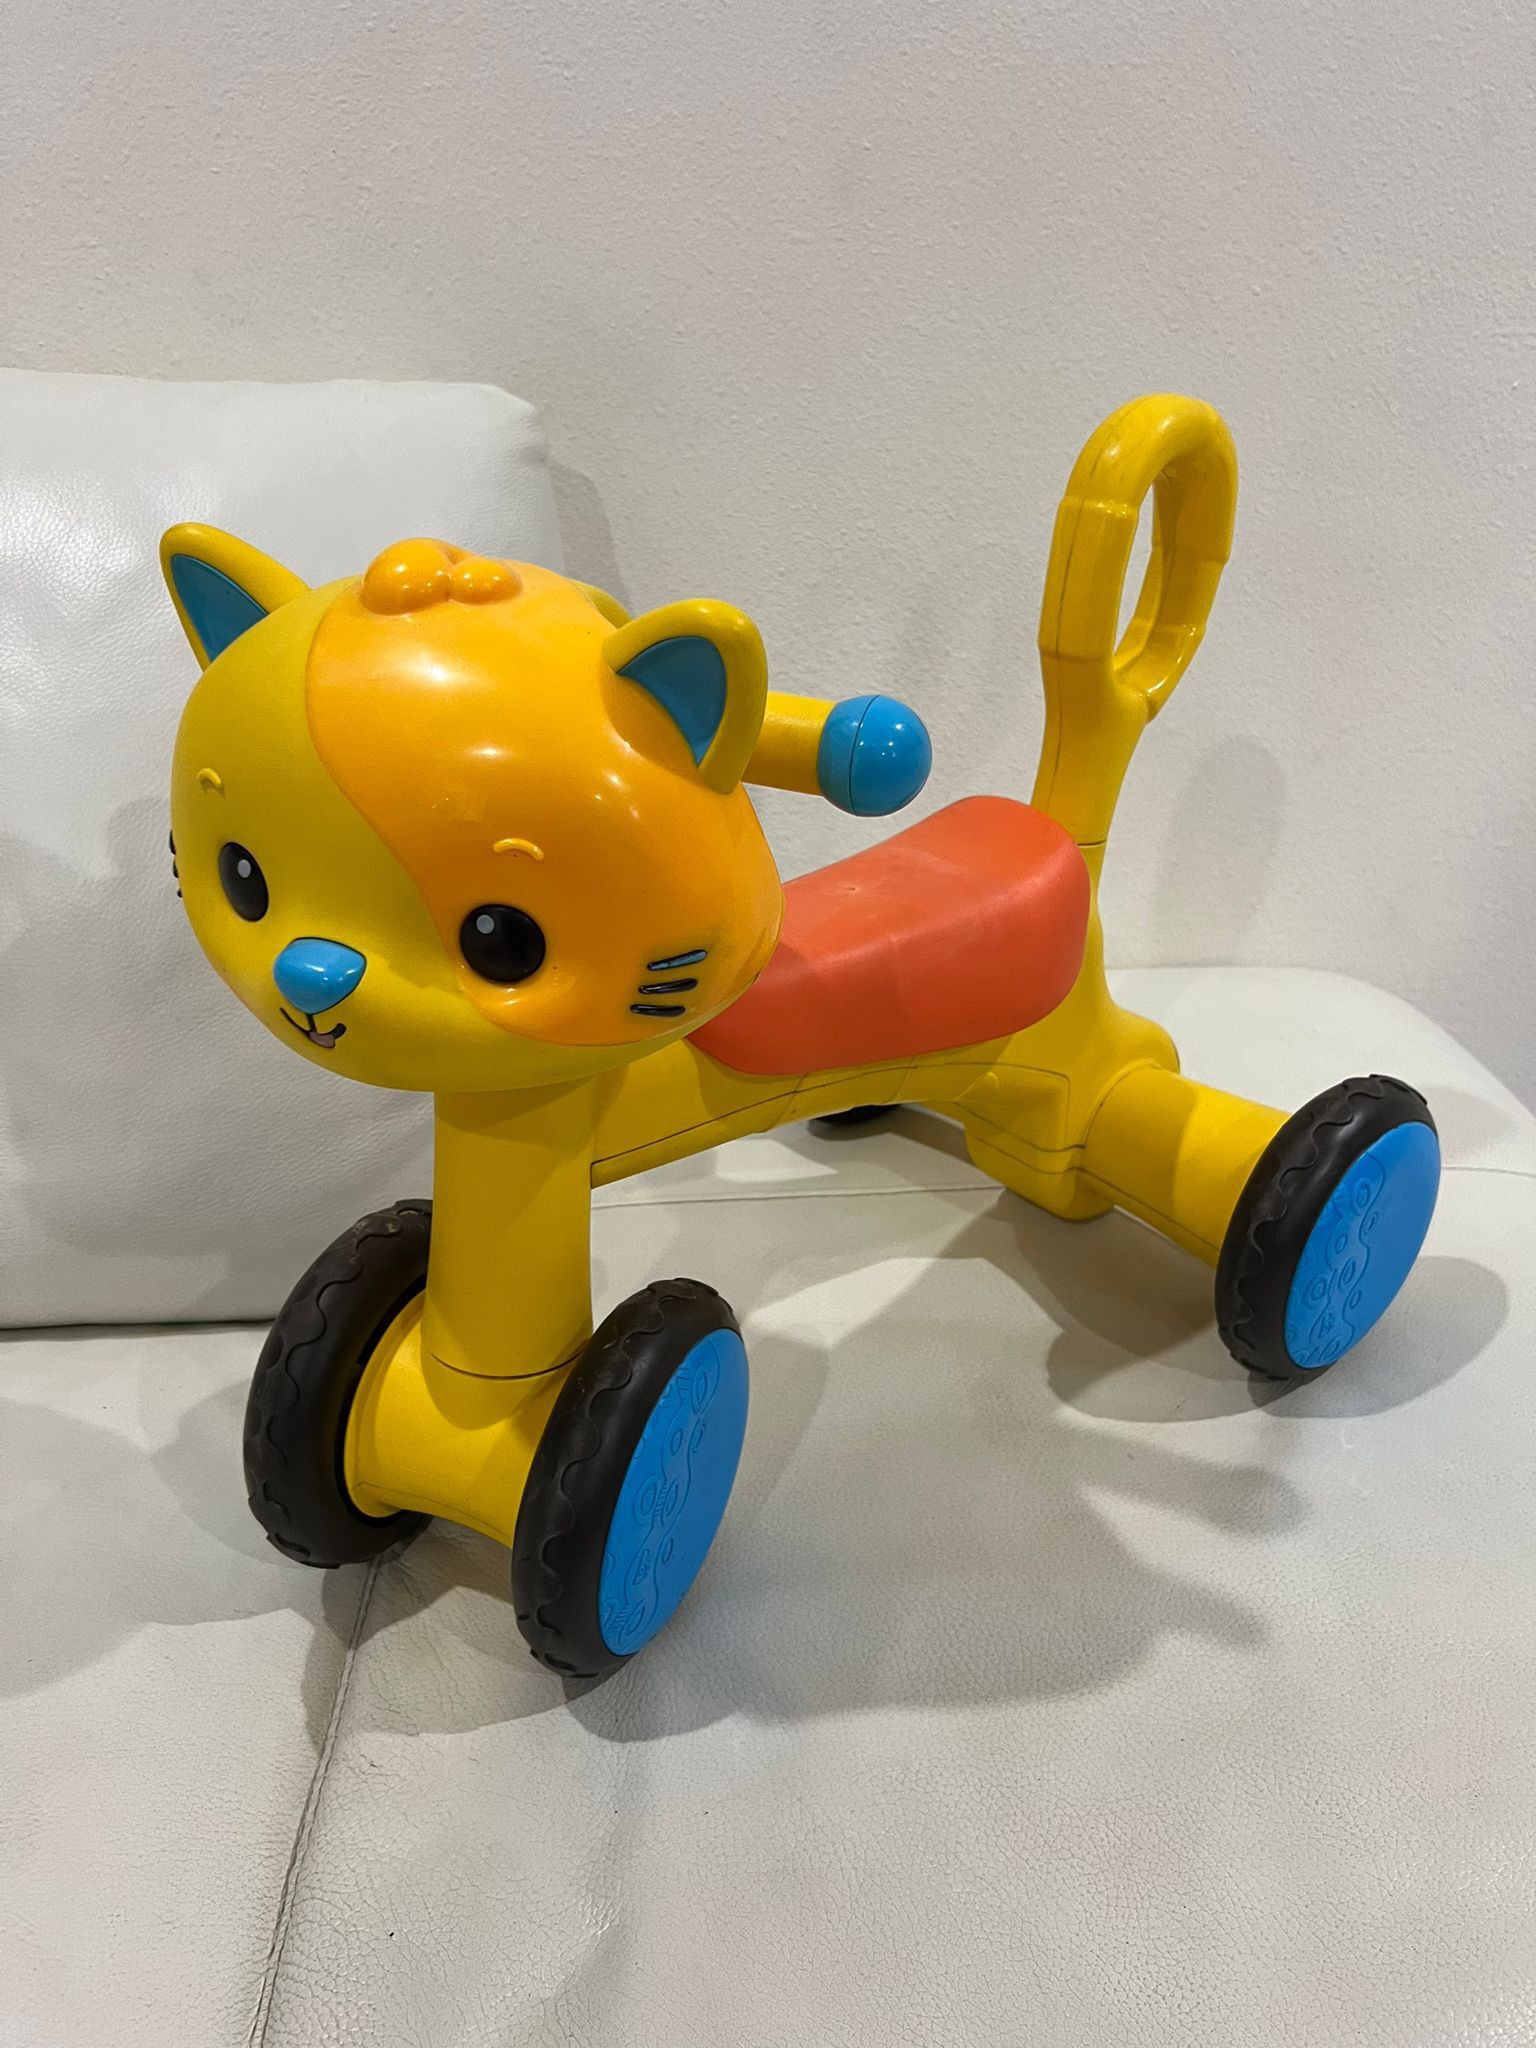 Kids toddler Cat Balance Bike $10 Toy Ride On / Juguete niño bici balance